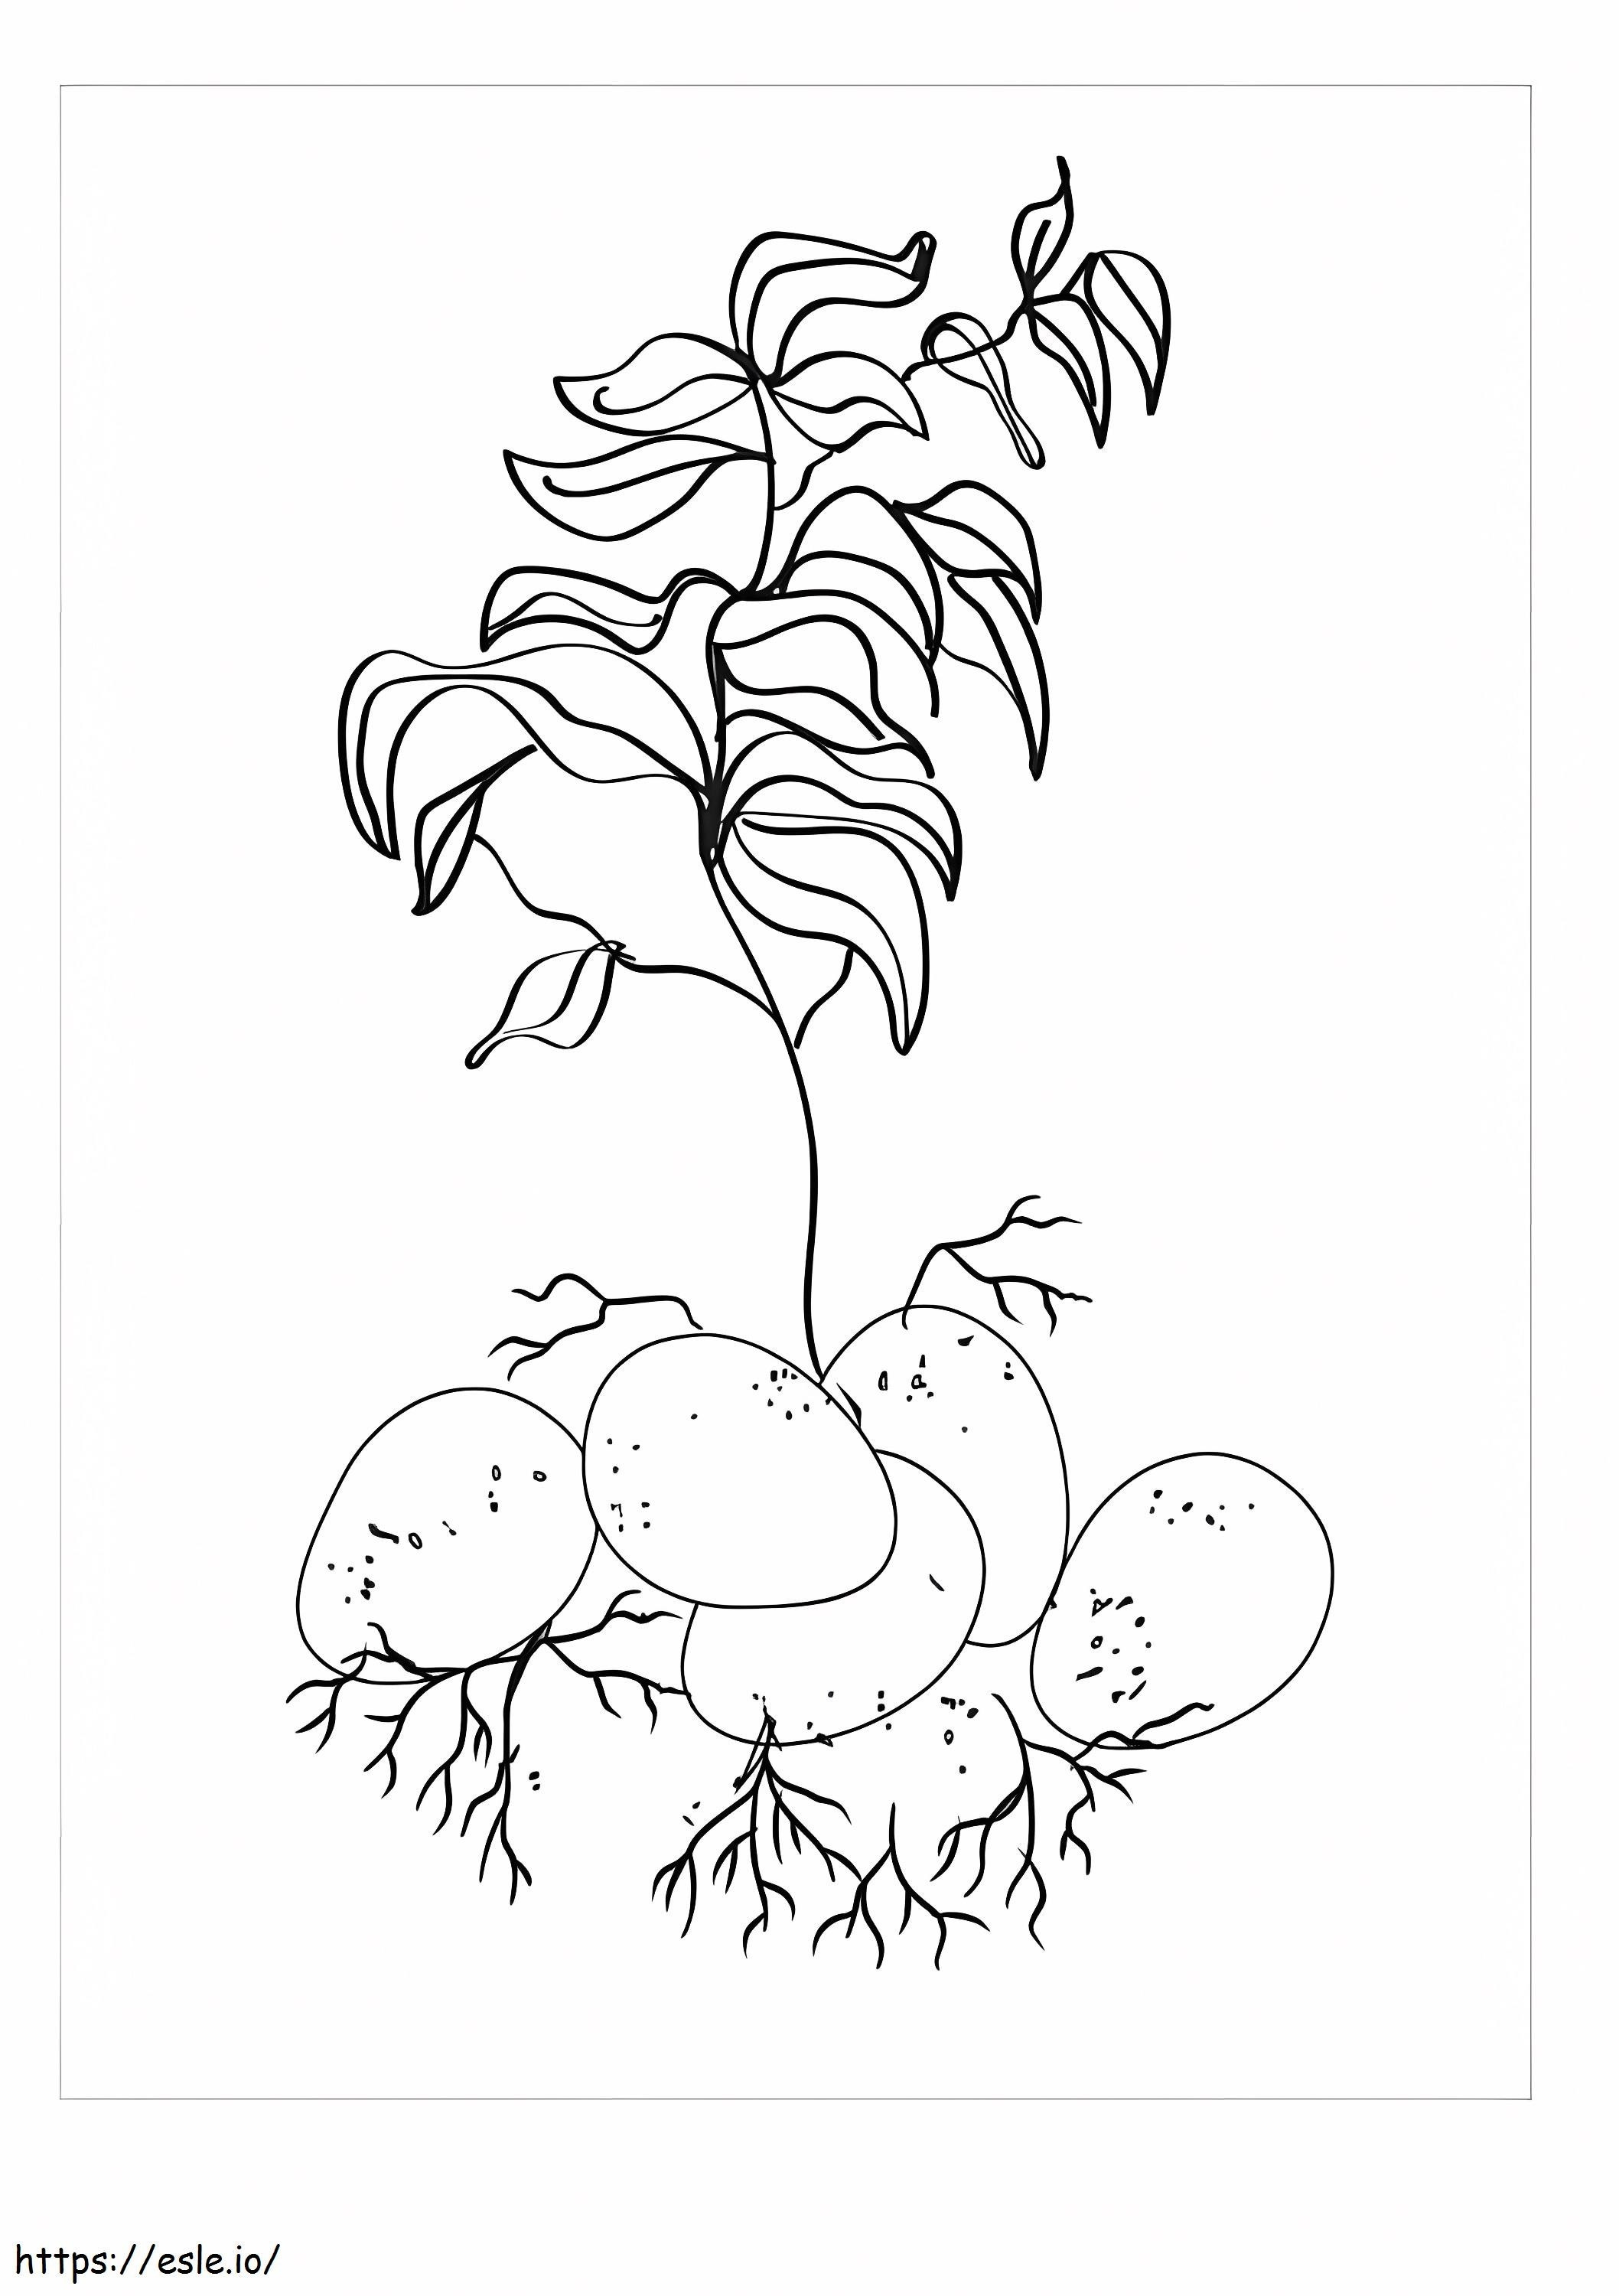 Basic Tree Potatoes coloring page